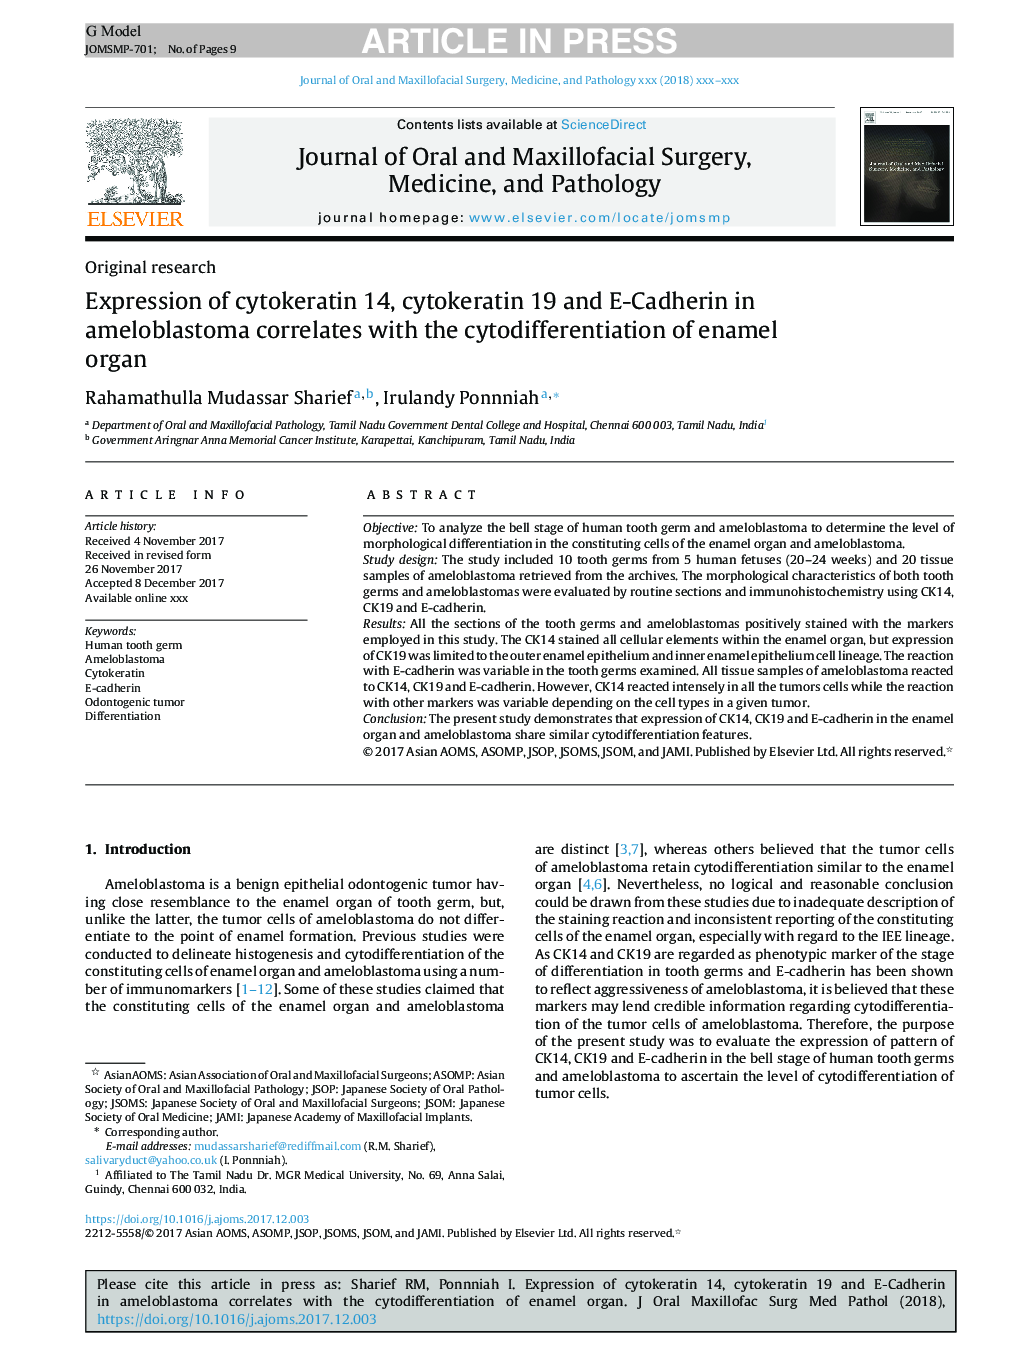 Expression of cytokeratin 14, cytokeratin 19 and E-Cadherin in ameloblastoma correlates with the cytodifferentiation of enamel organ